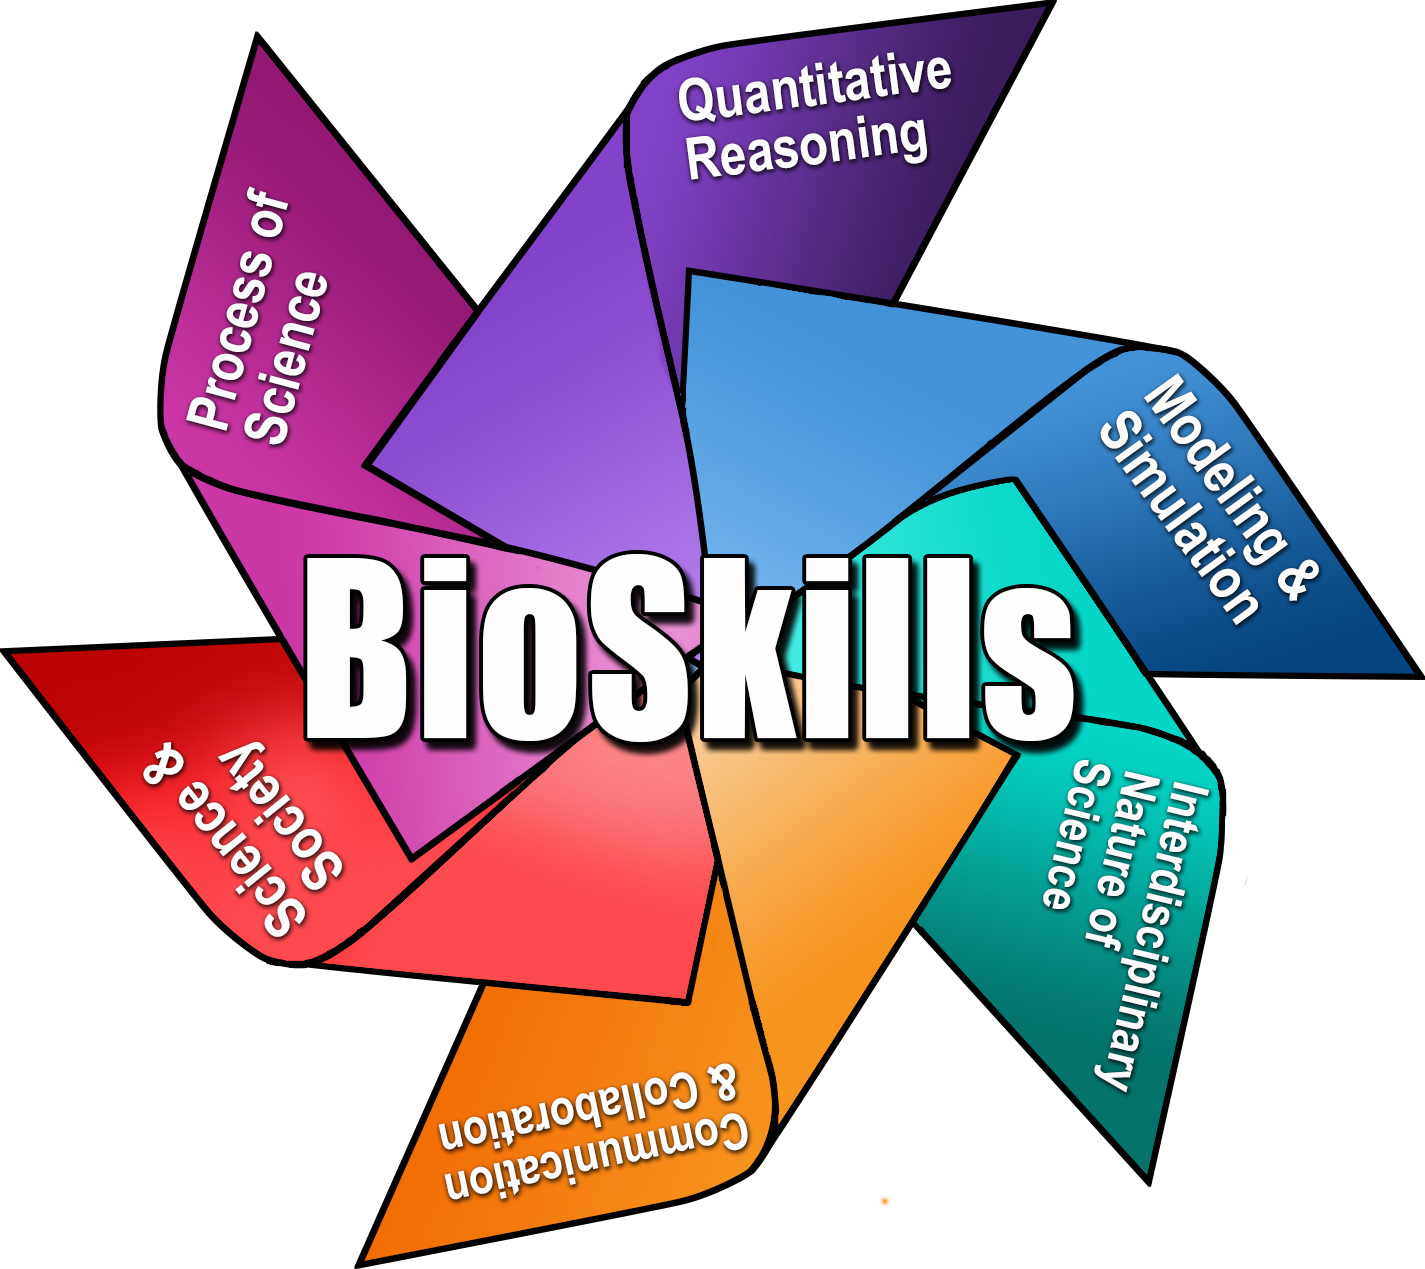 research skills biology